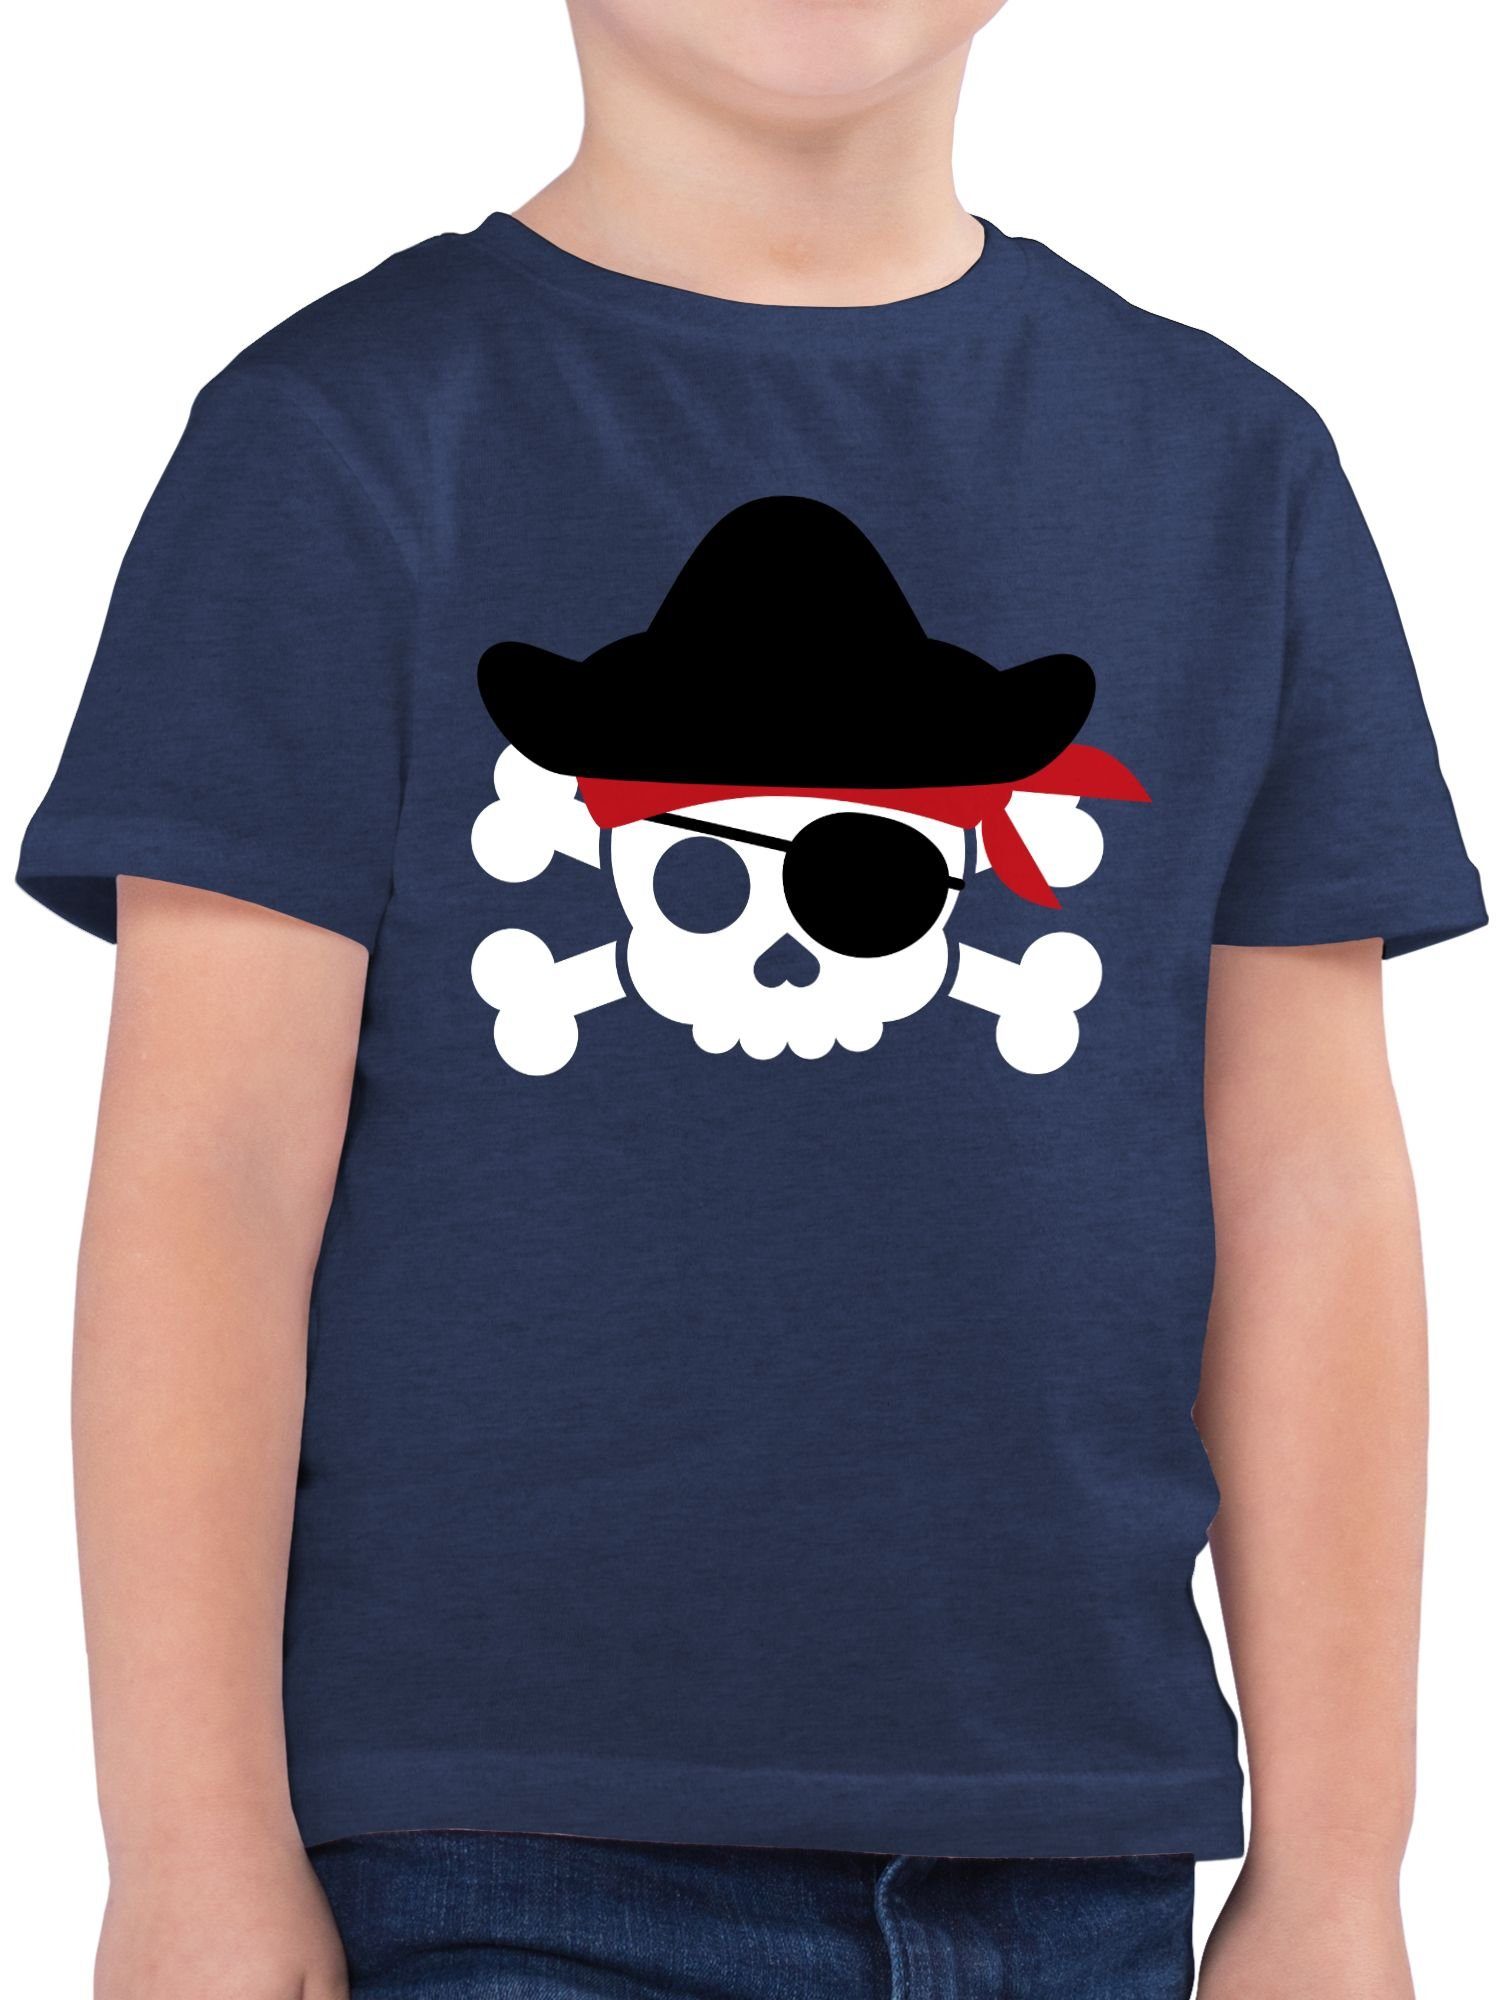 Shirtracer T-Shirt Piratenkopf Kostüm - Piraten Pirat Totenkopf Piratenkostüm Geburtstags Karneval & Fasching 3 Dunkelblau Meliert